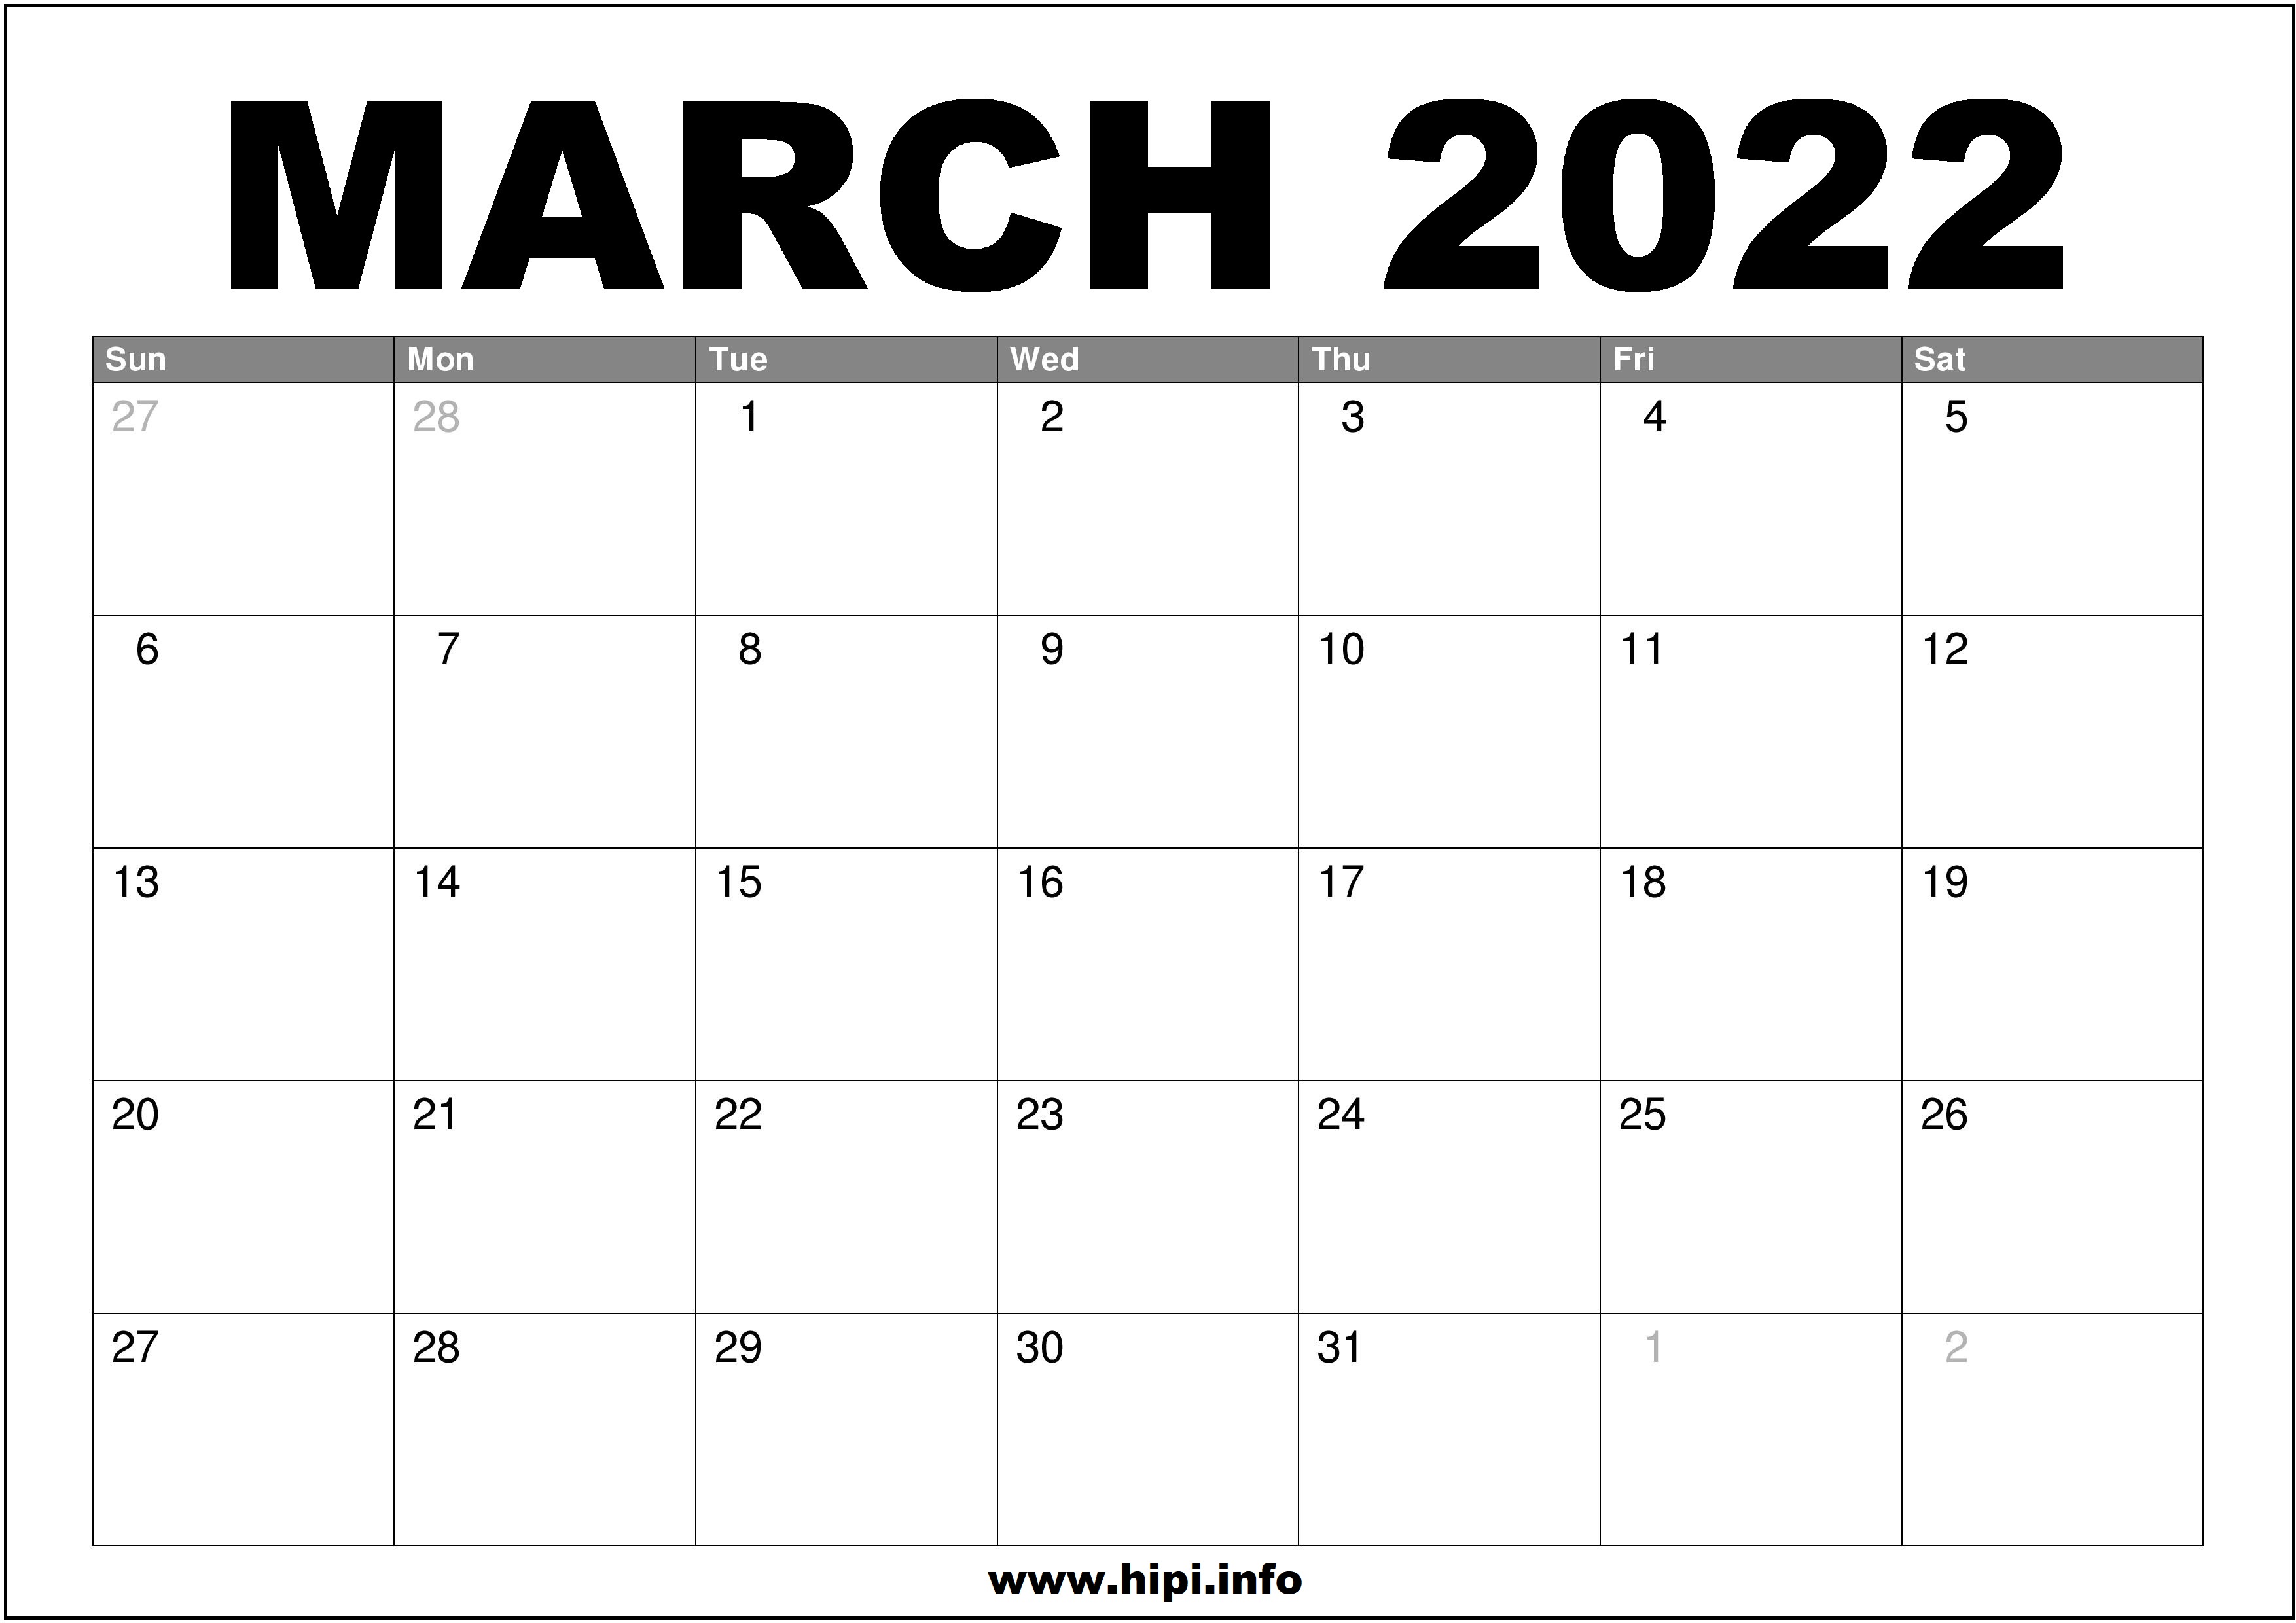 march 2022 calendar heading